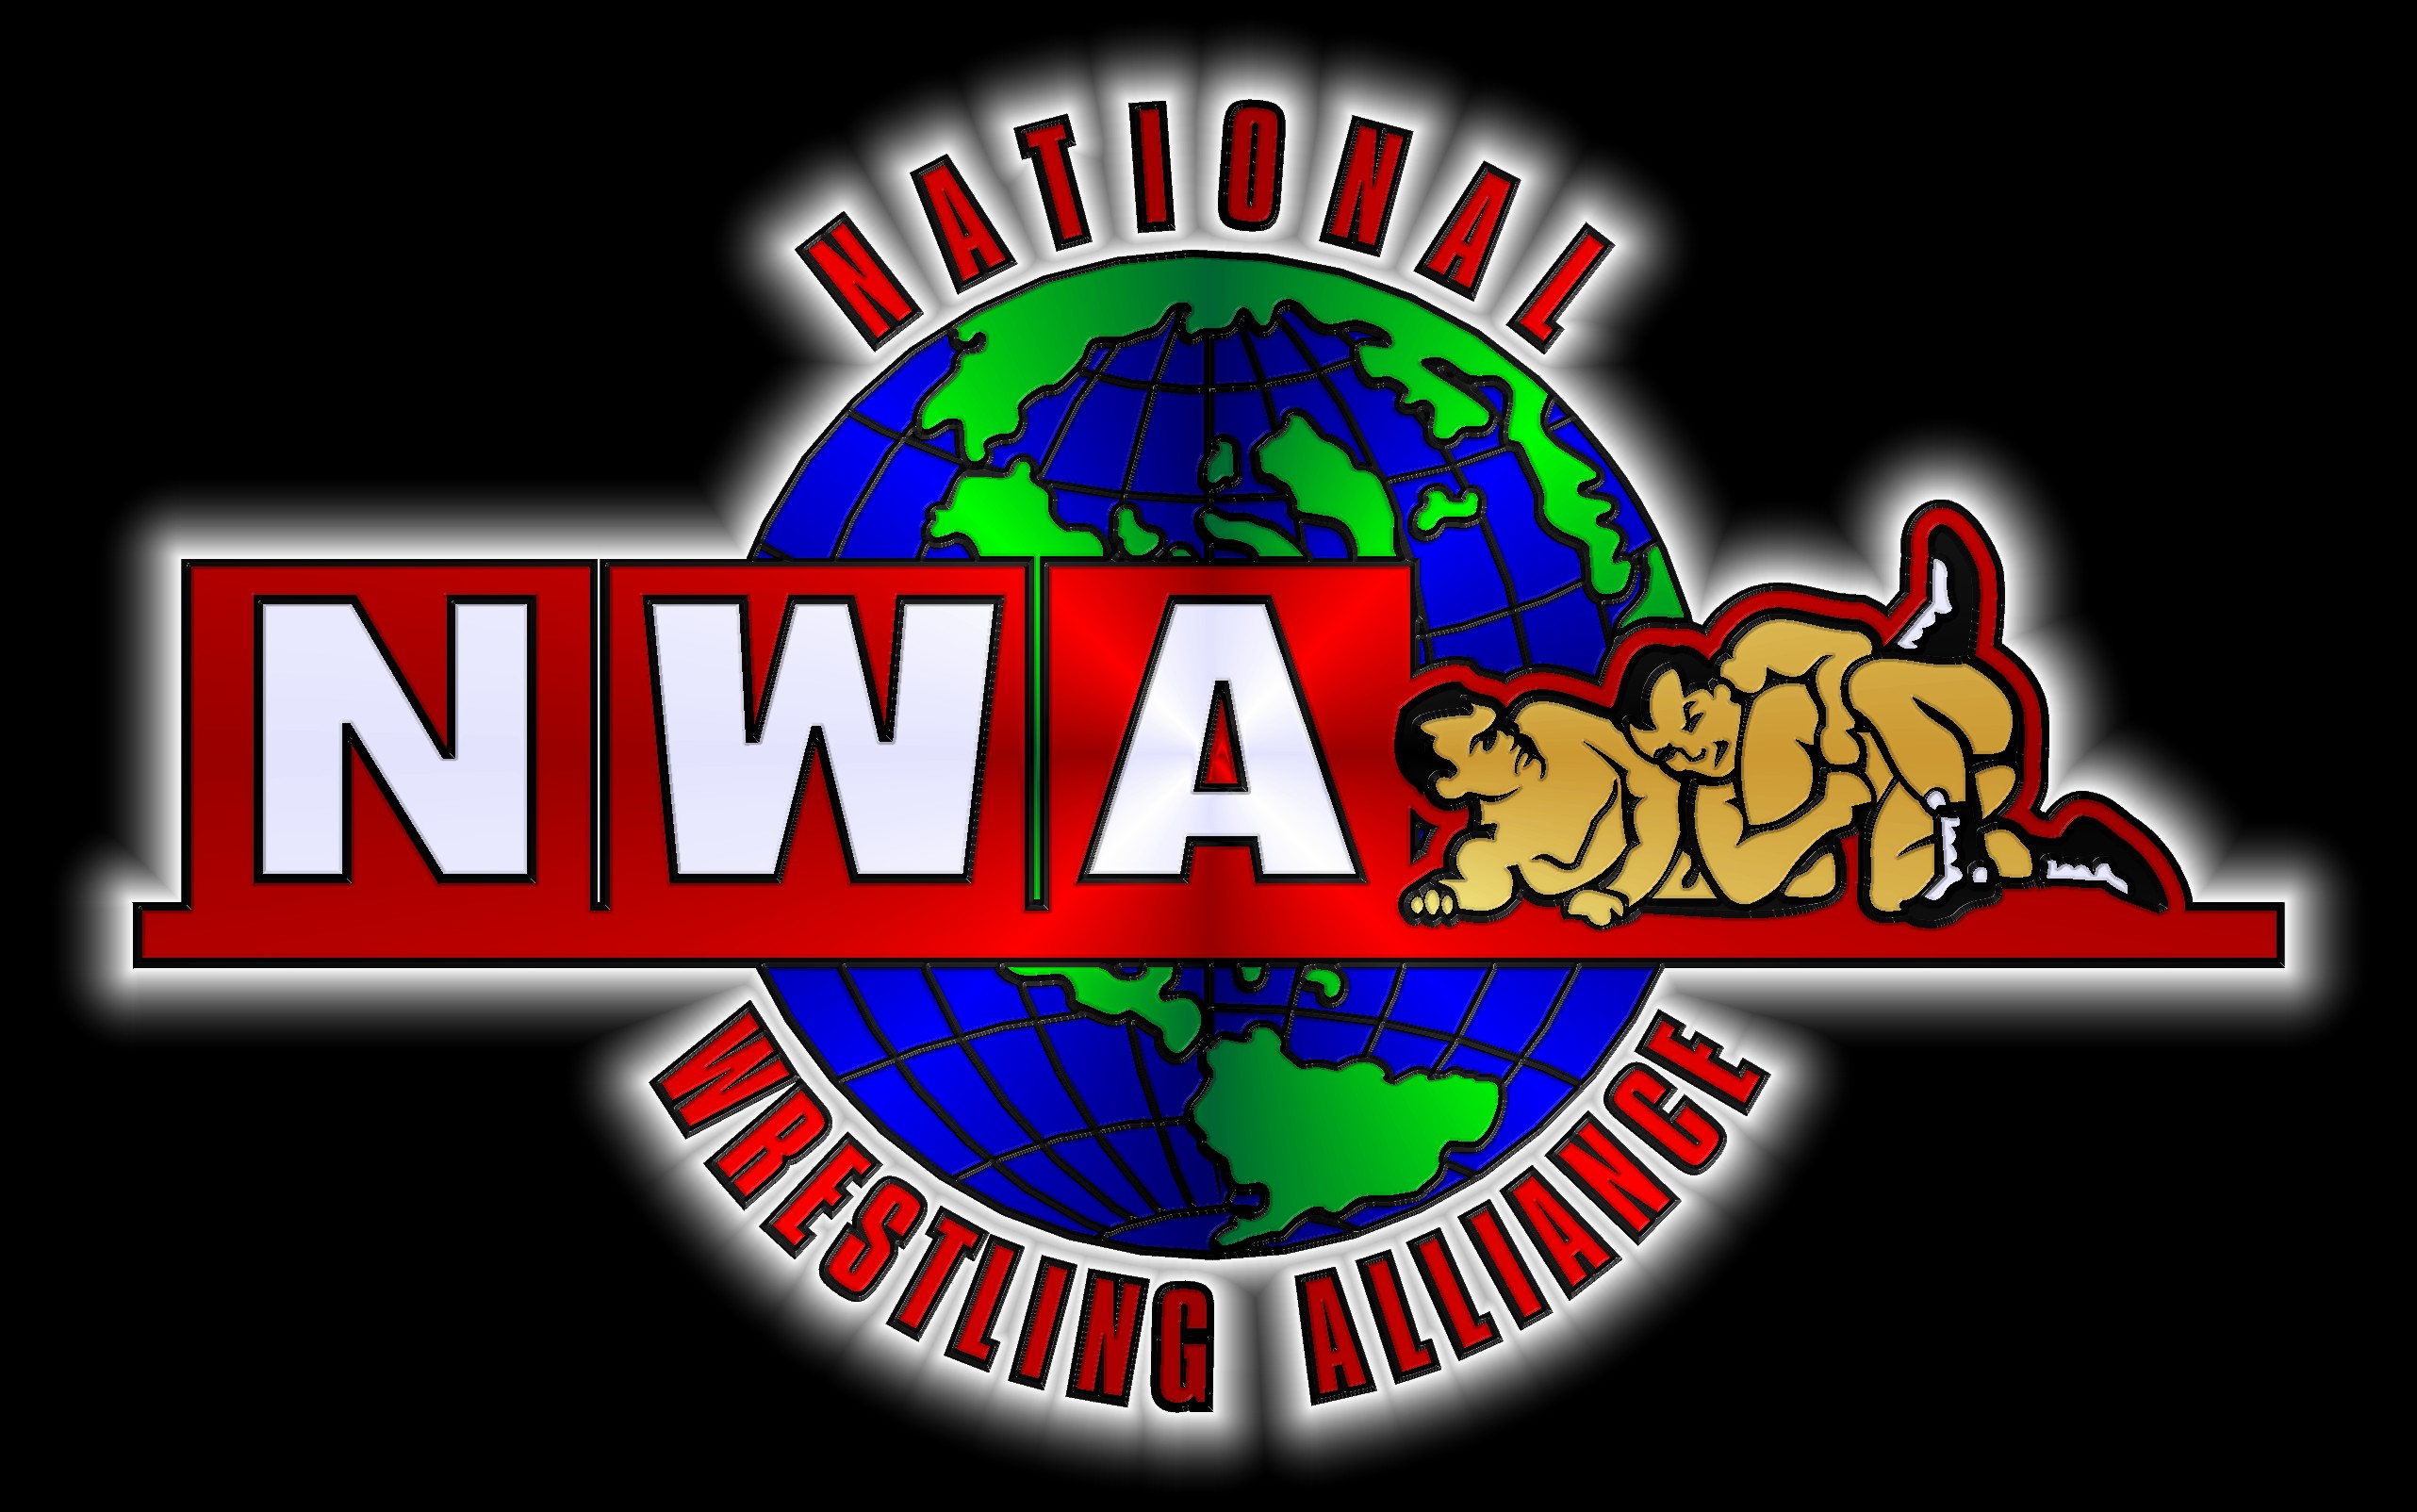 national wrestling alliance